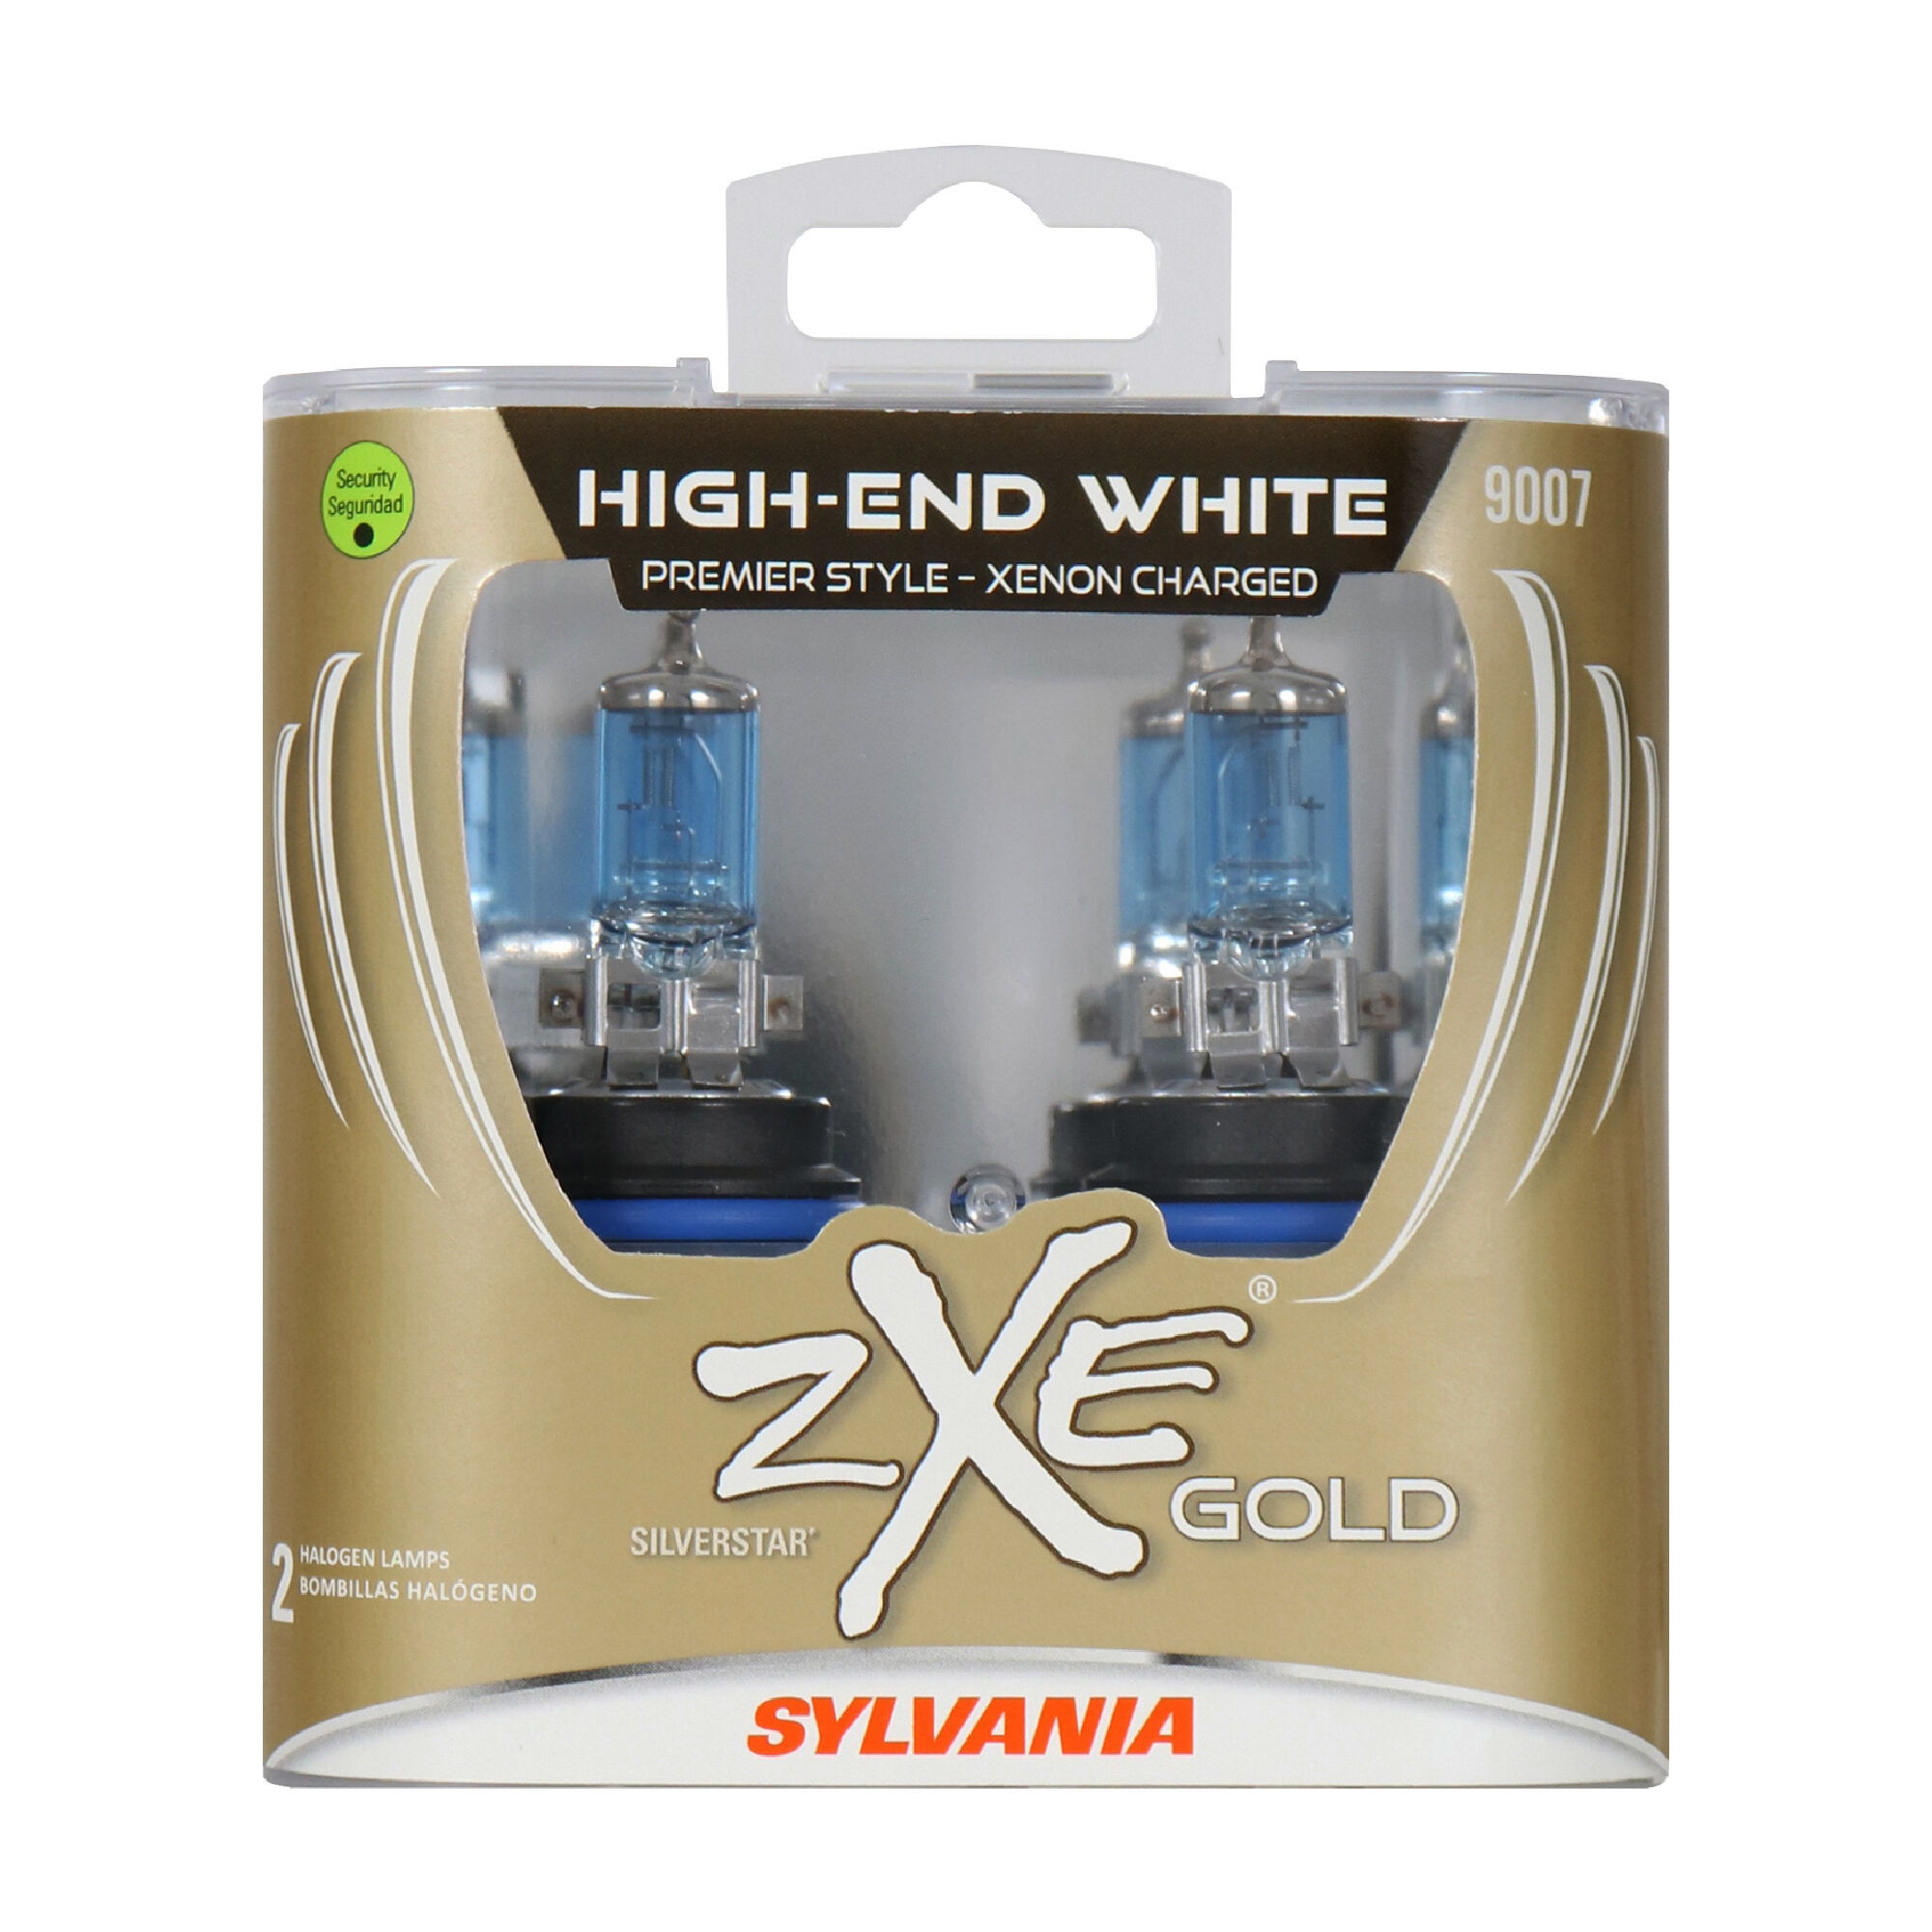 SYLVANIA 9007 SilverStar zXe Gold Halogen Headlight Bulb, 2 Pack